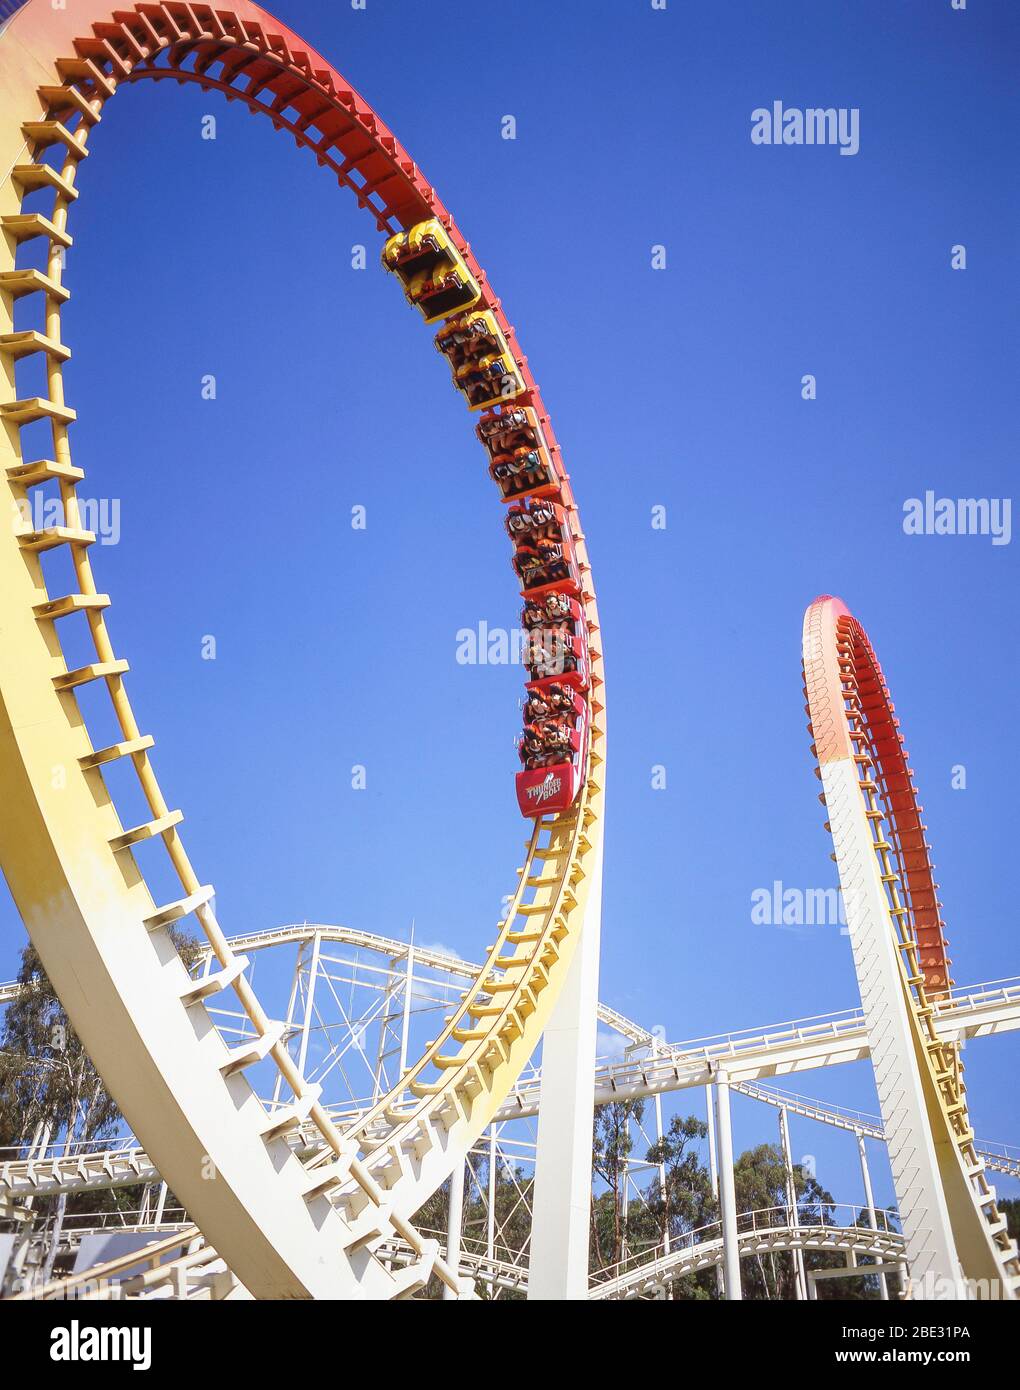 Corkscrew Rollercoaster at Sea World Theme Park, Main Beach, City of Gold Coast, Queensland, Australia - Stock Image